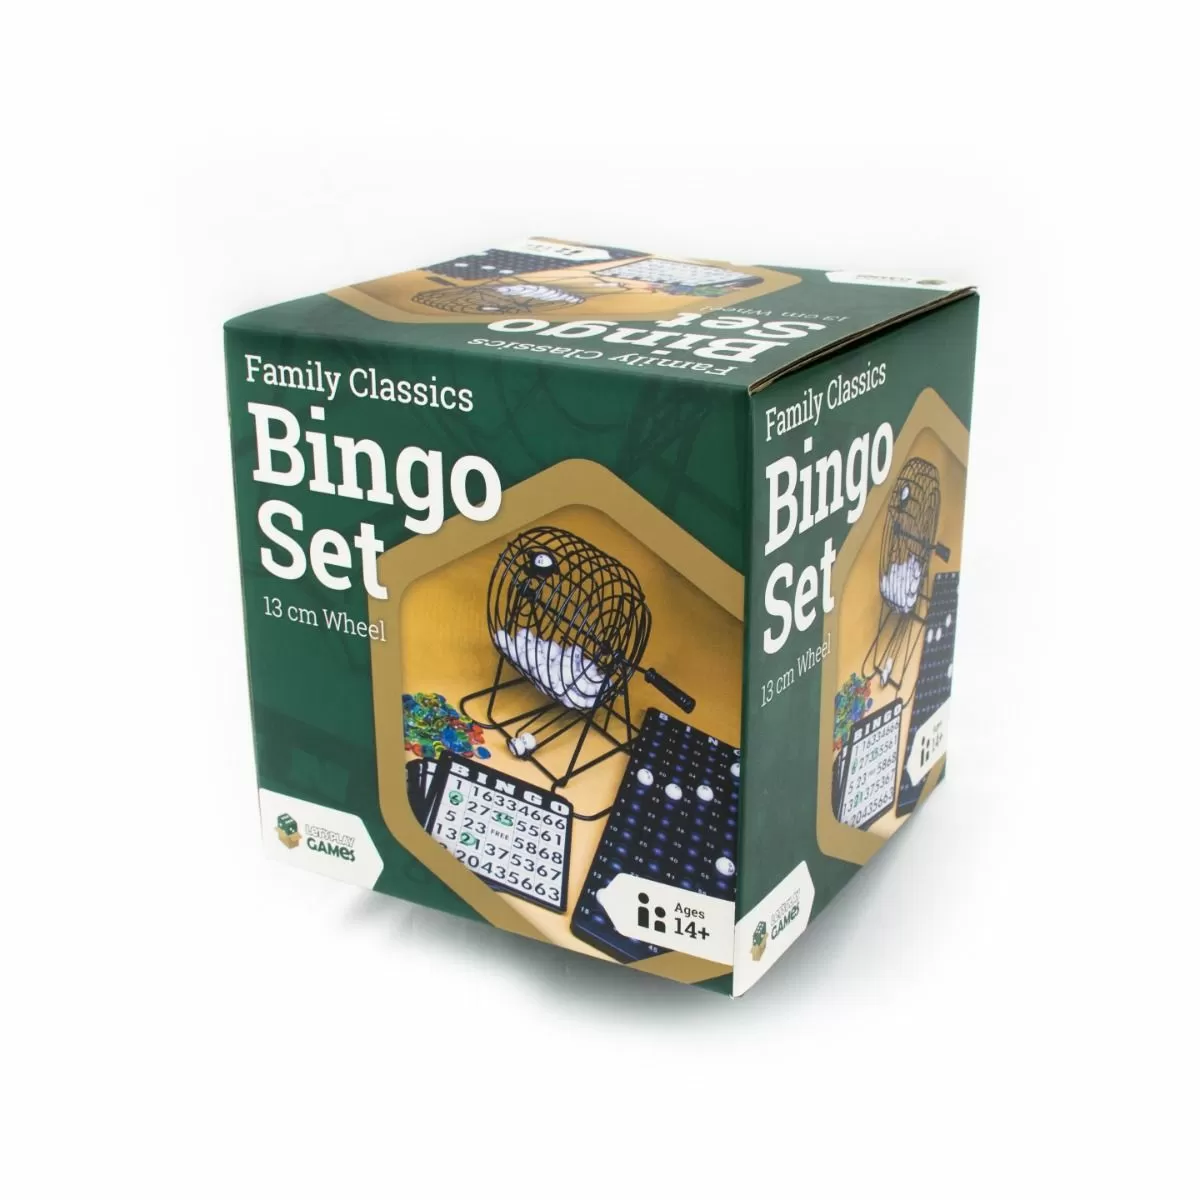 LPG Bingo Set - 13 cm Wheel [::] Let's Play Games